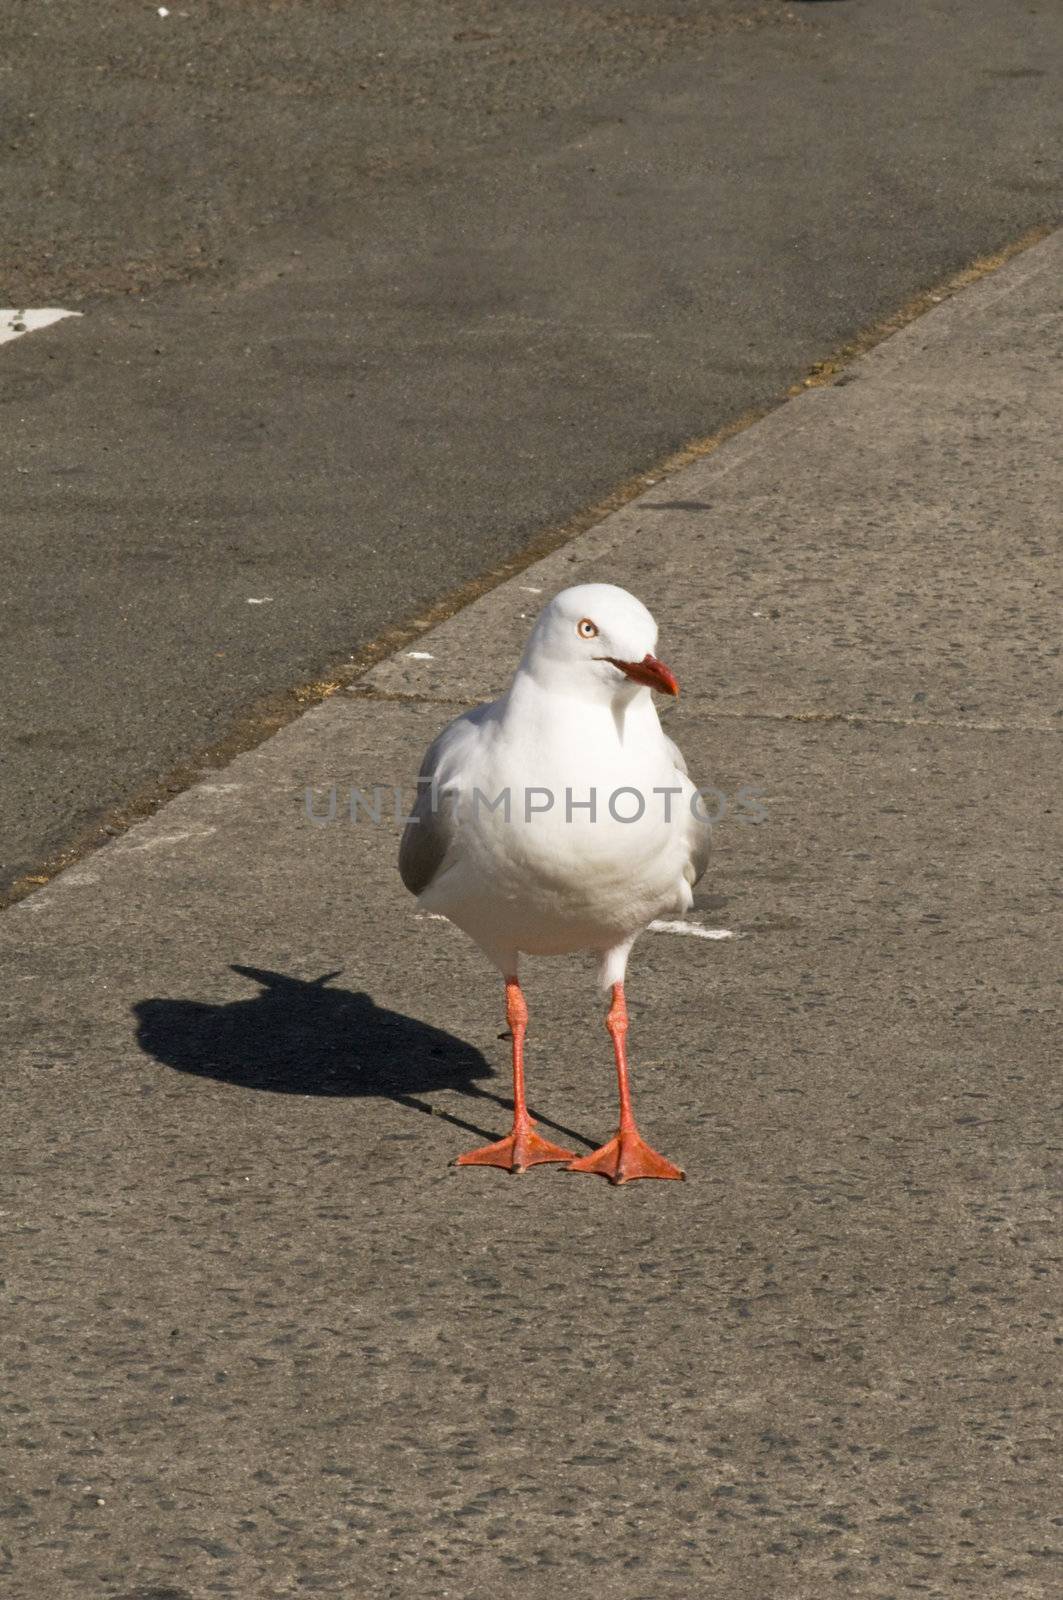 Curious seagull in the summer sun